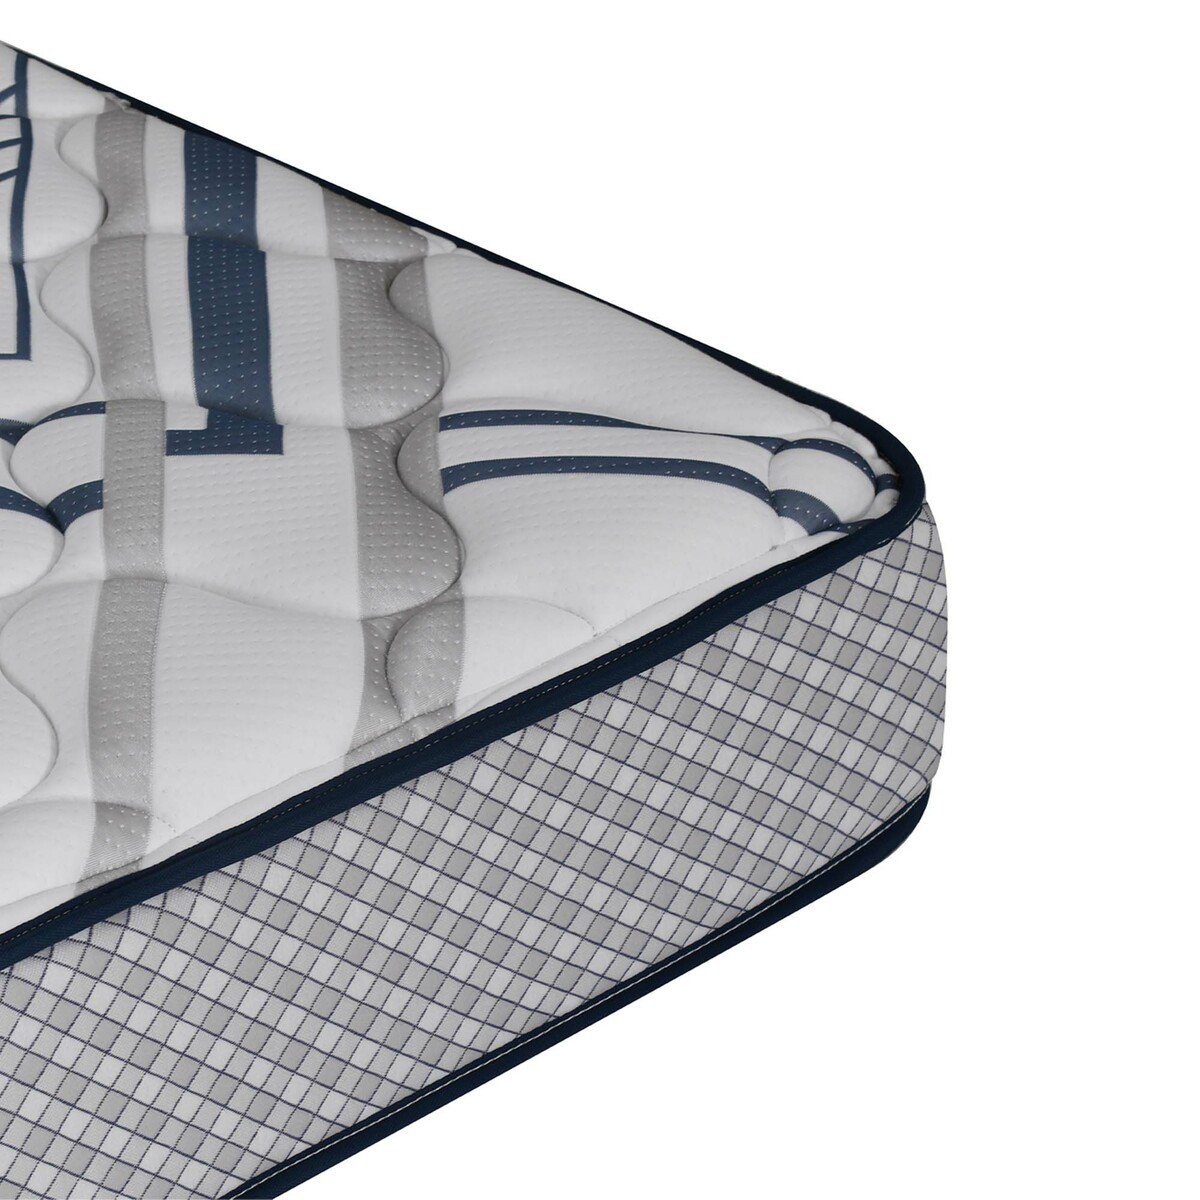 DesignPlus Queen's Choice Pocket Spring Mattress 190x180x26cm Firm